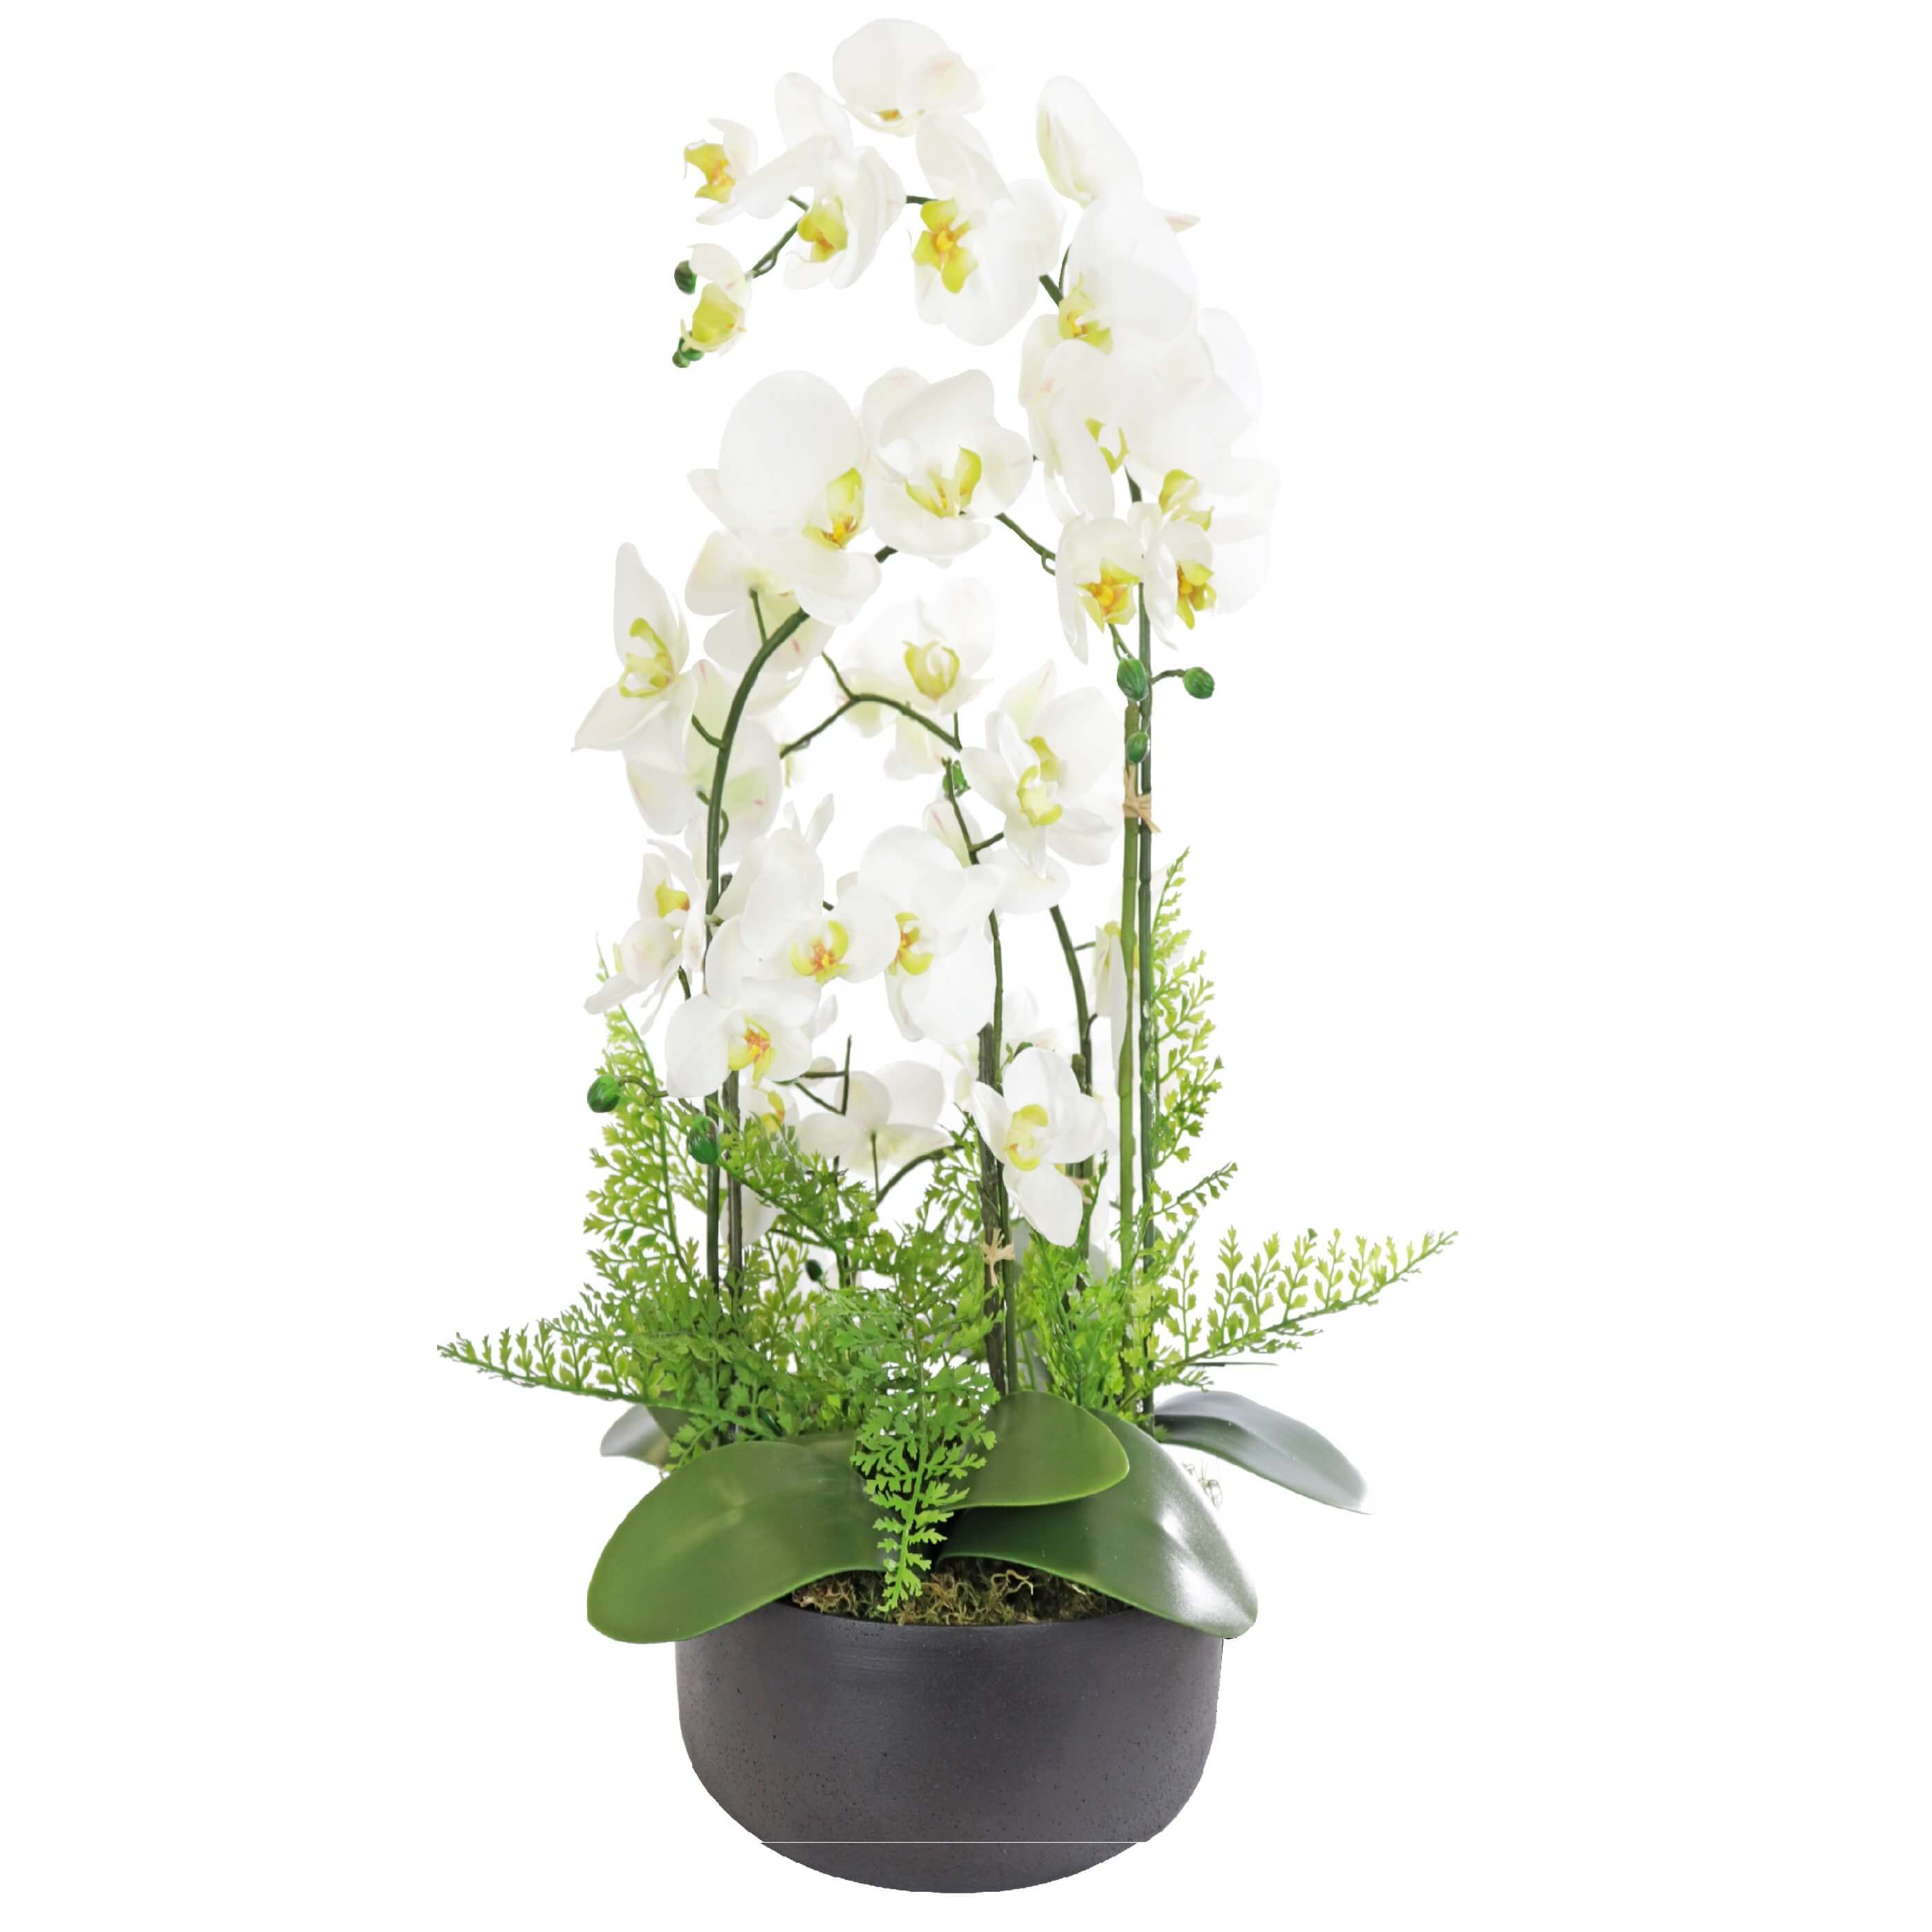 Deluxe fake orchid plant in dark ceramic pot